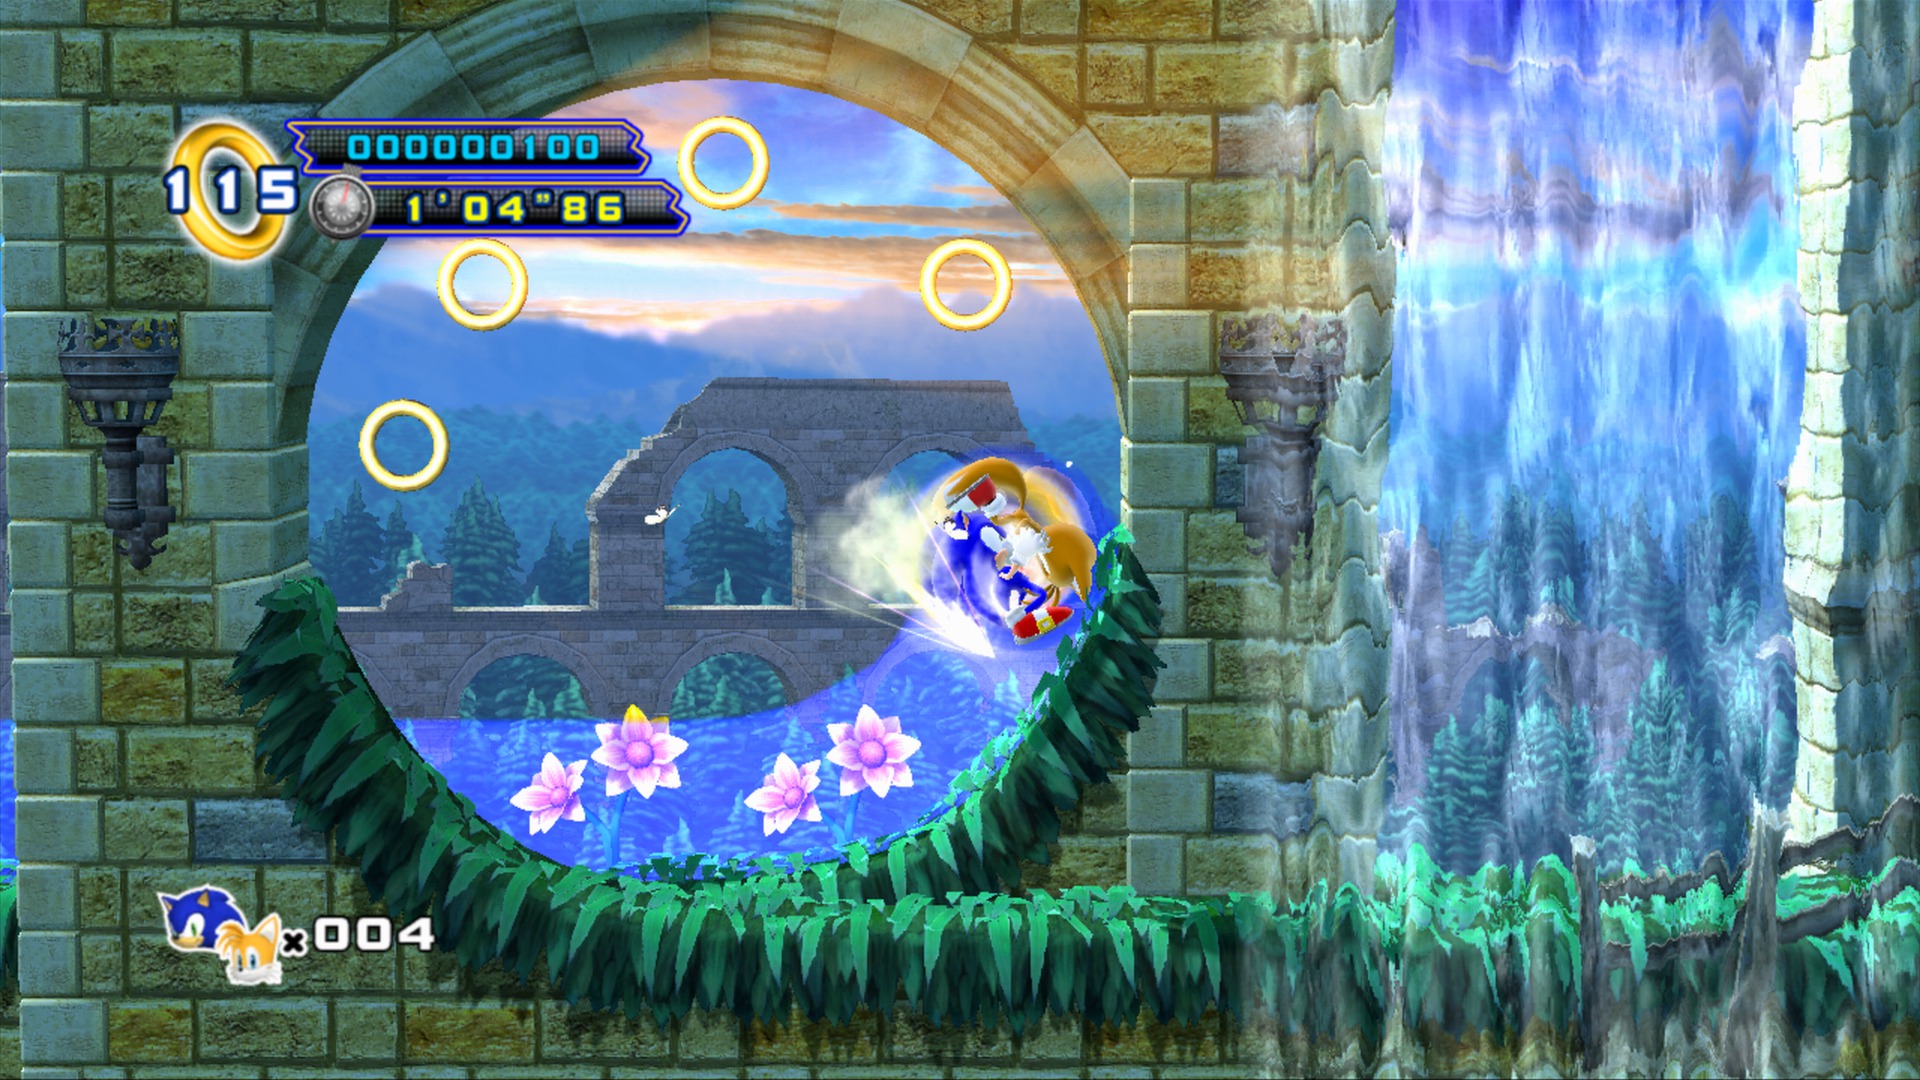 Sonic the Hedgehog 4 - Episode II on Steam